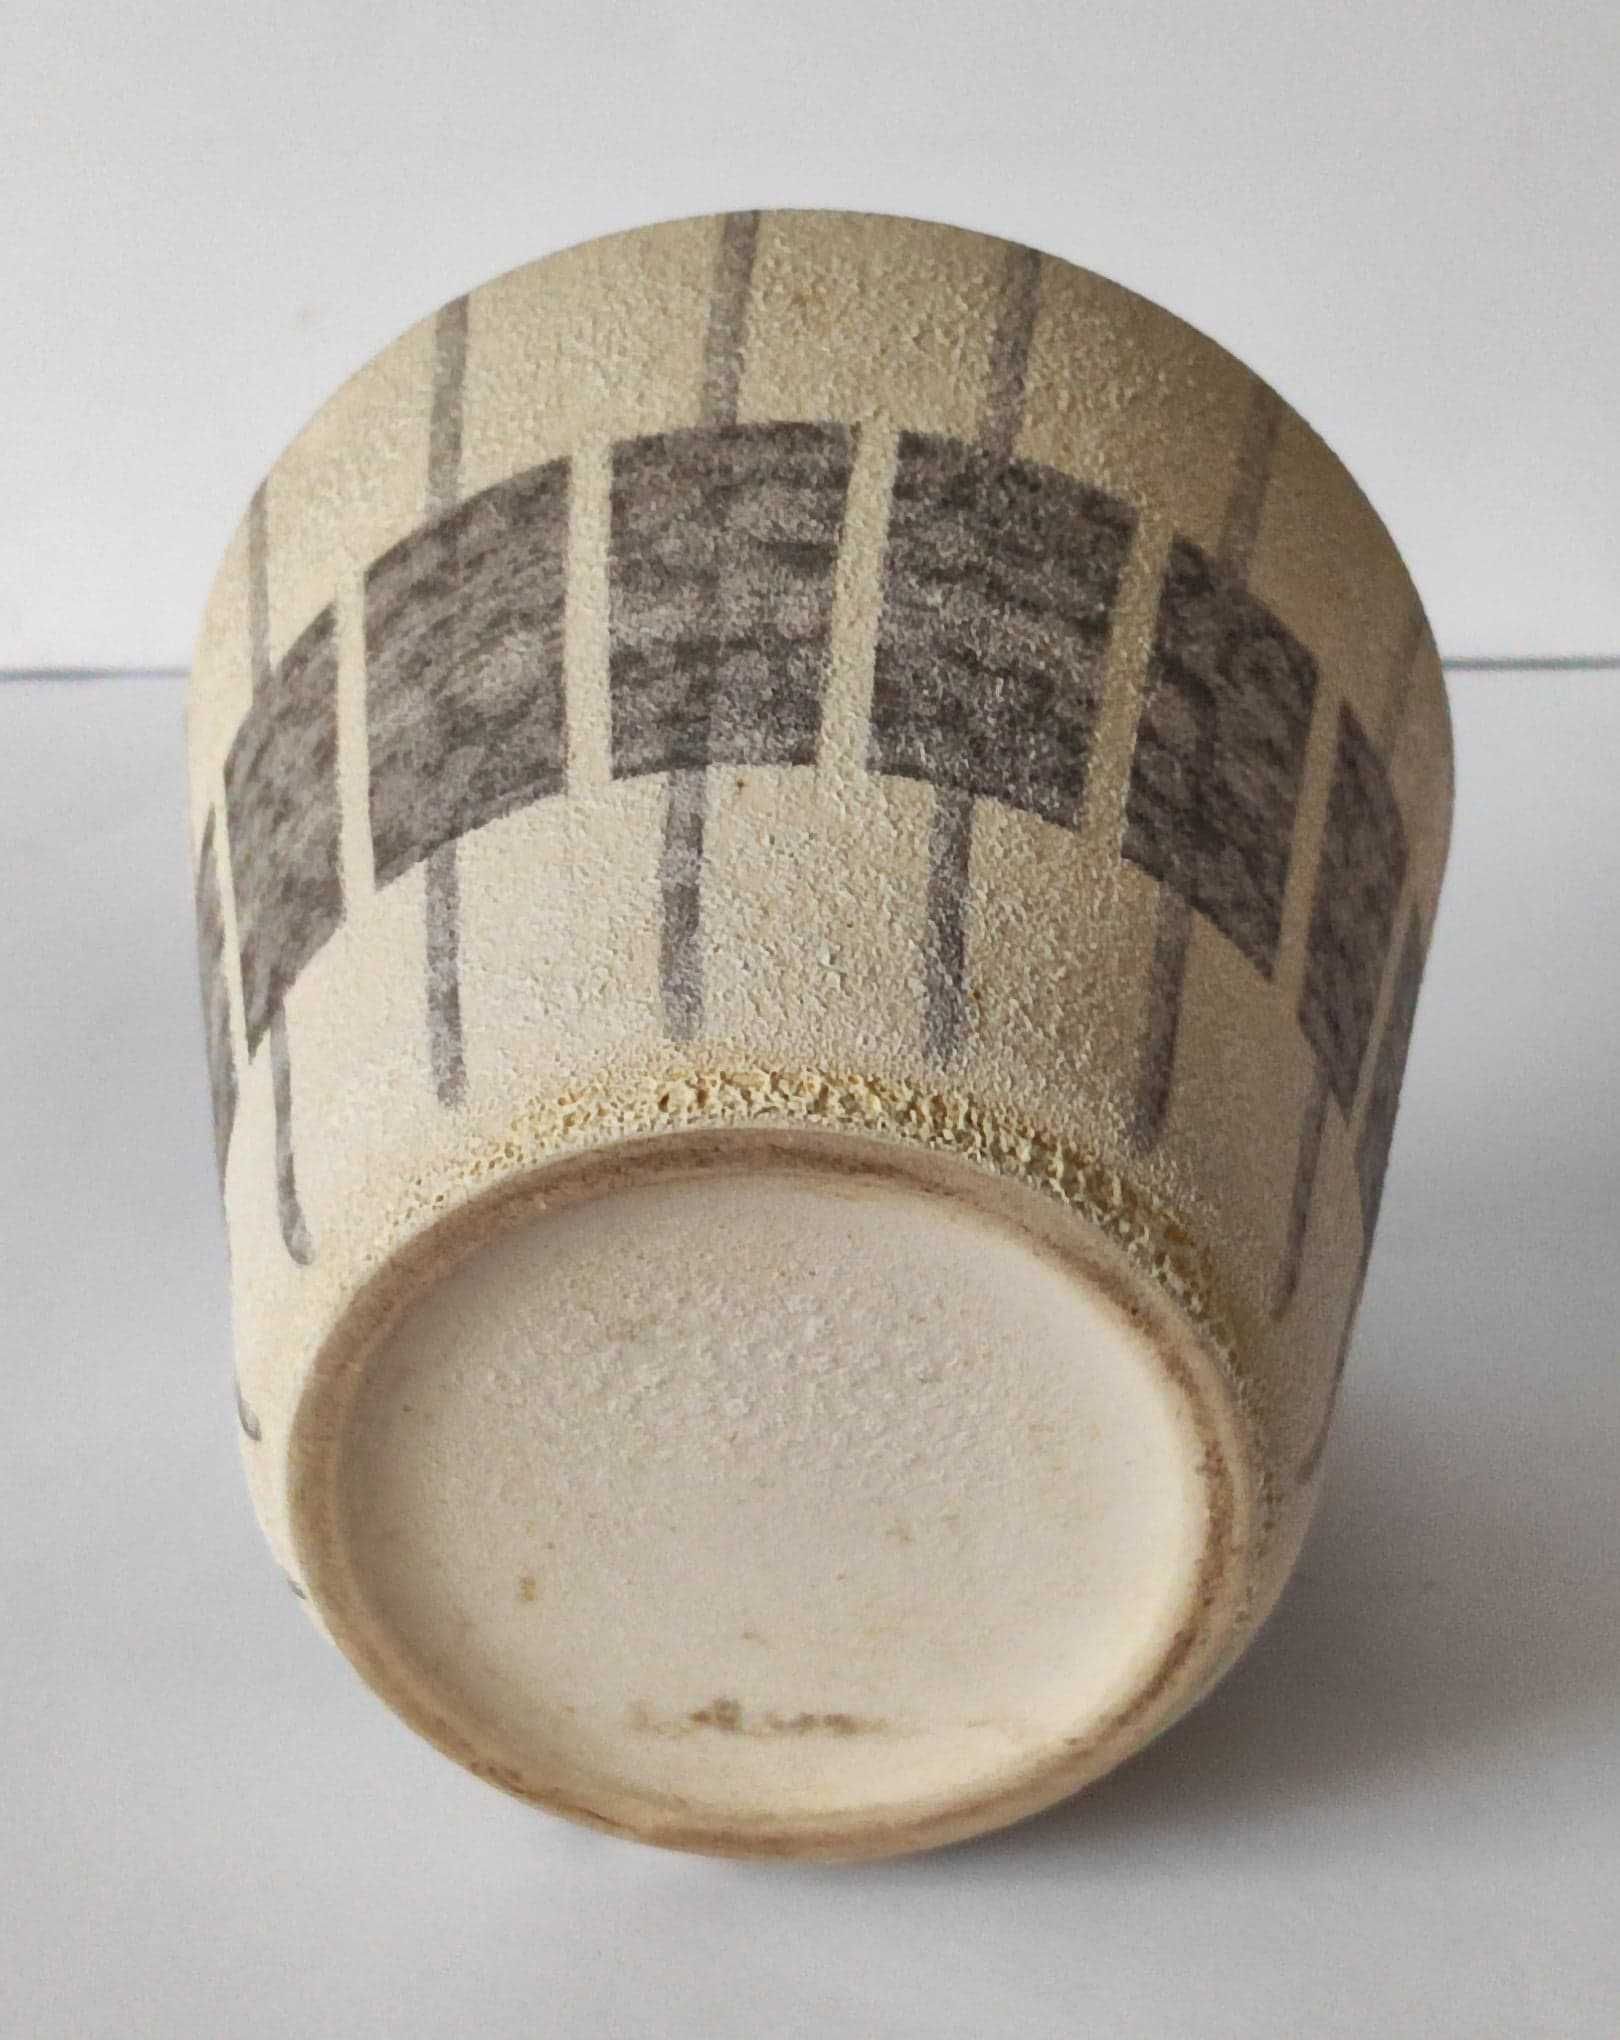 Stara ceramika niemiecka, osłonka doniczki Ilkra, Design WGP Vintage